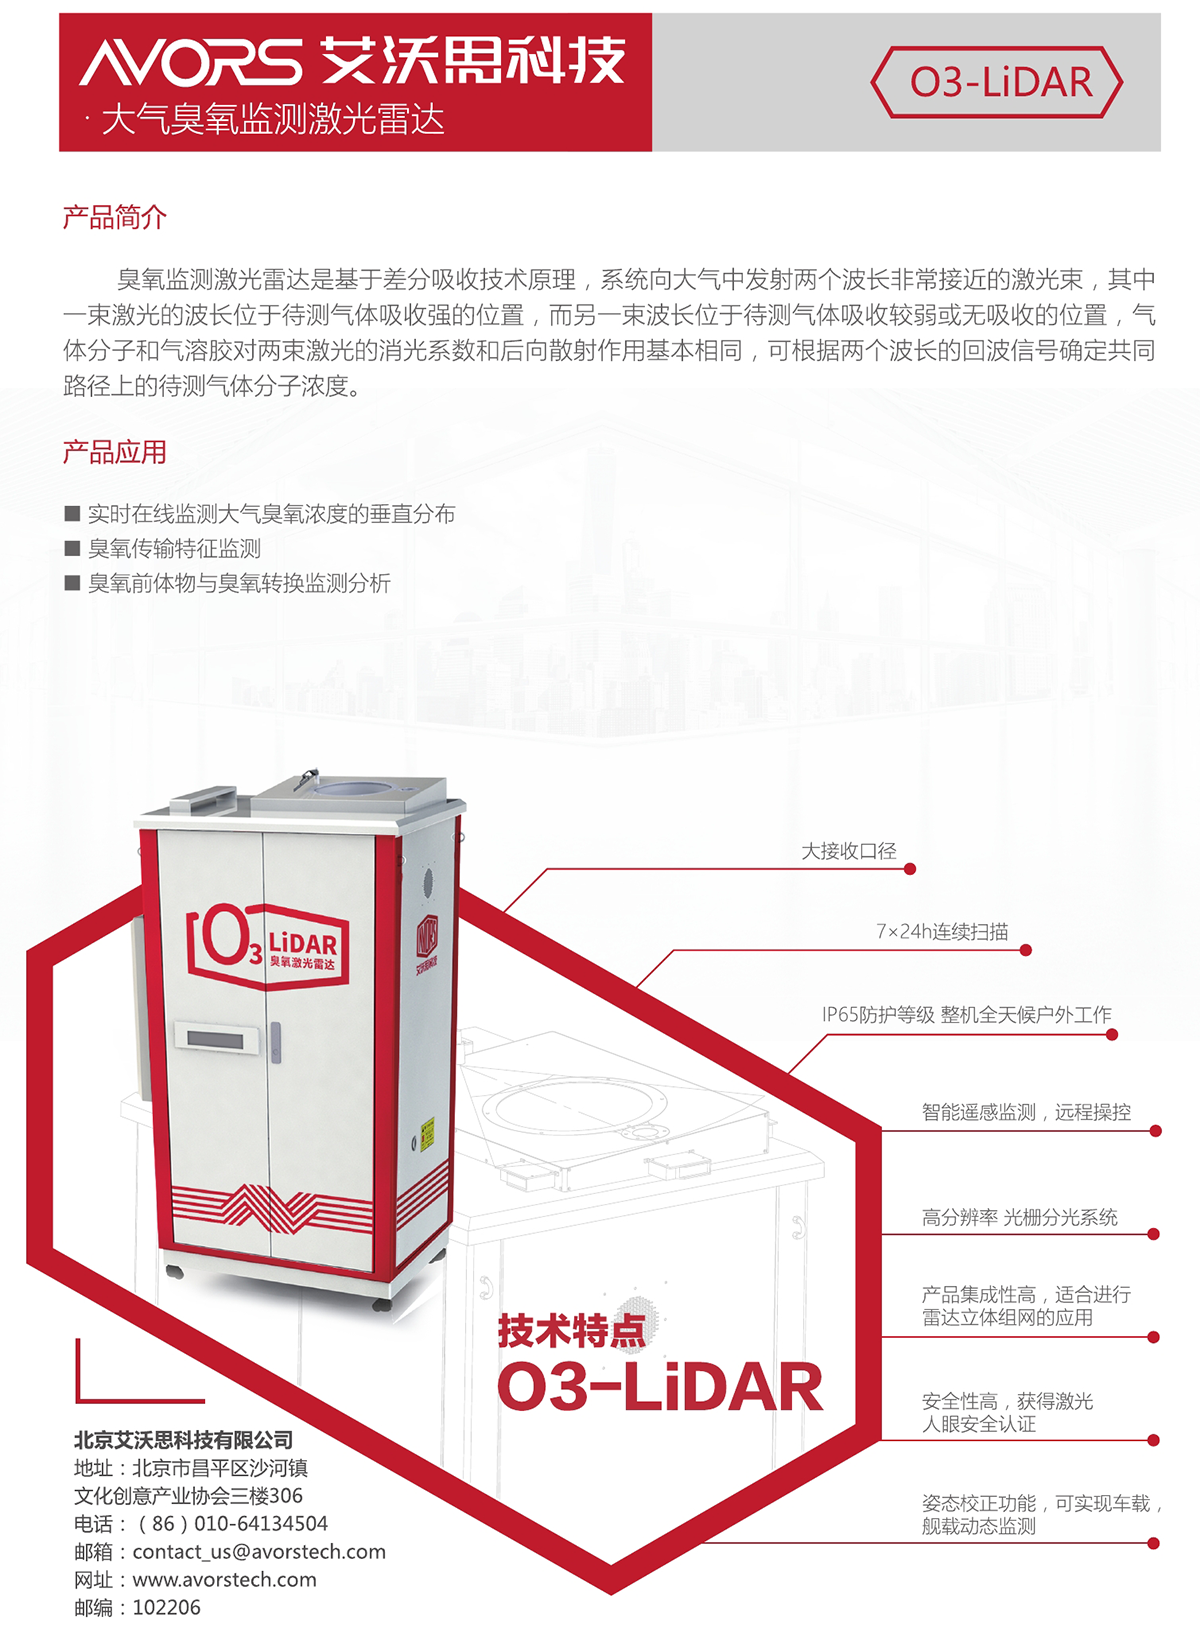 O3-LIDAR Lidar for atmospheric ozone monitoring